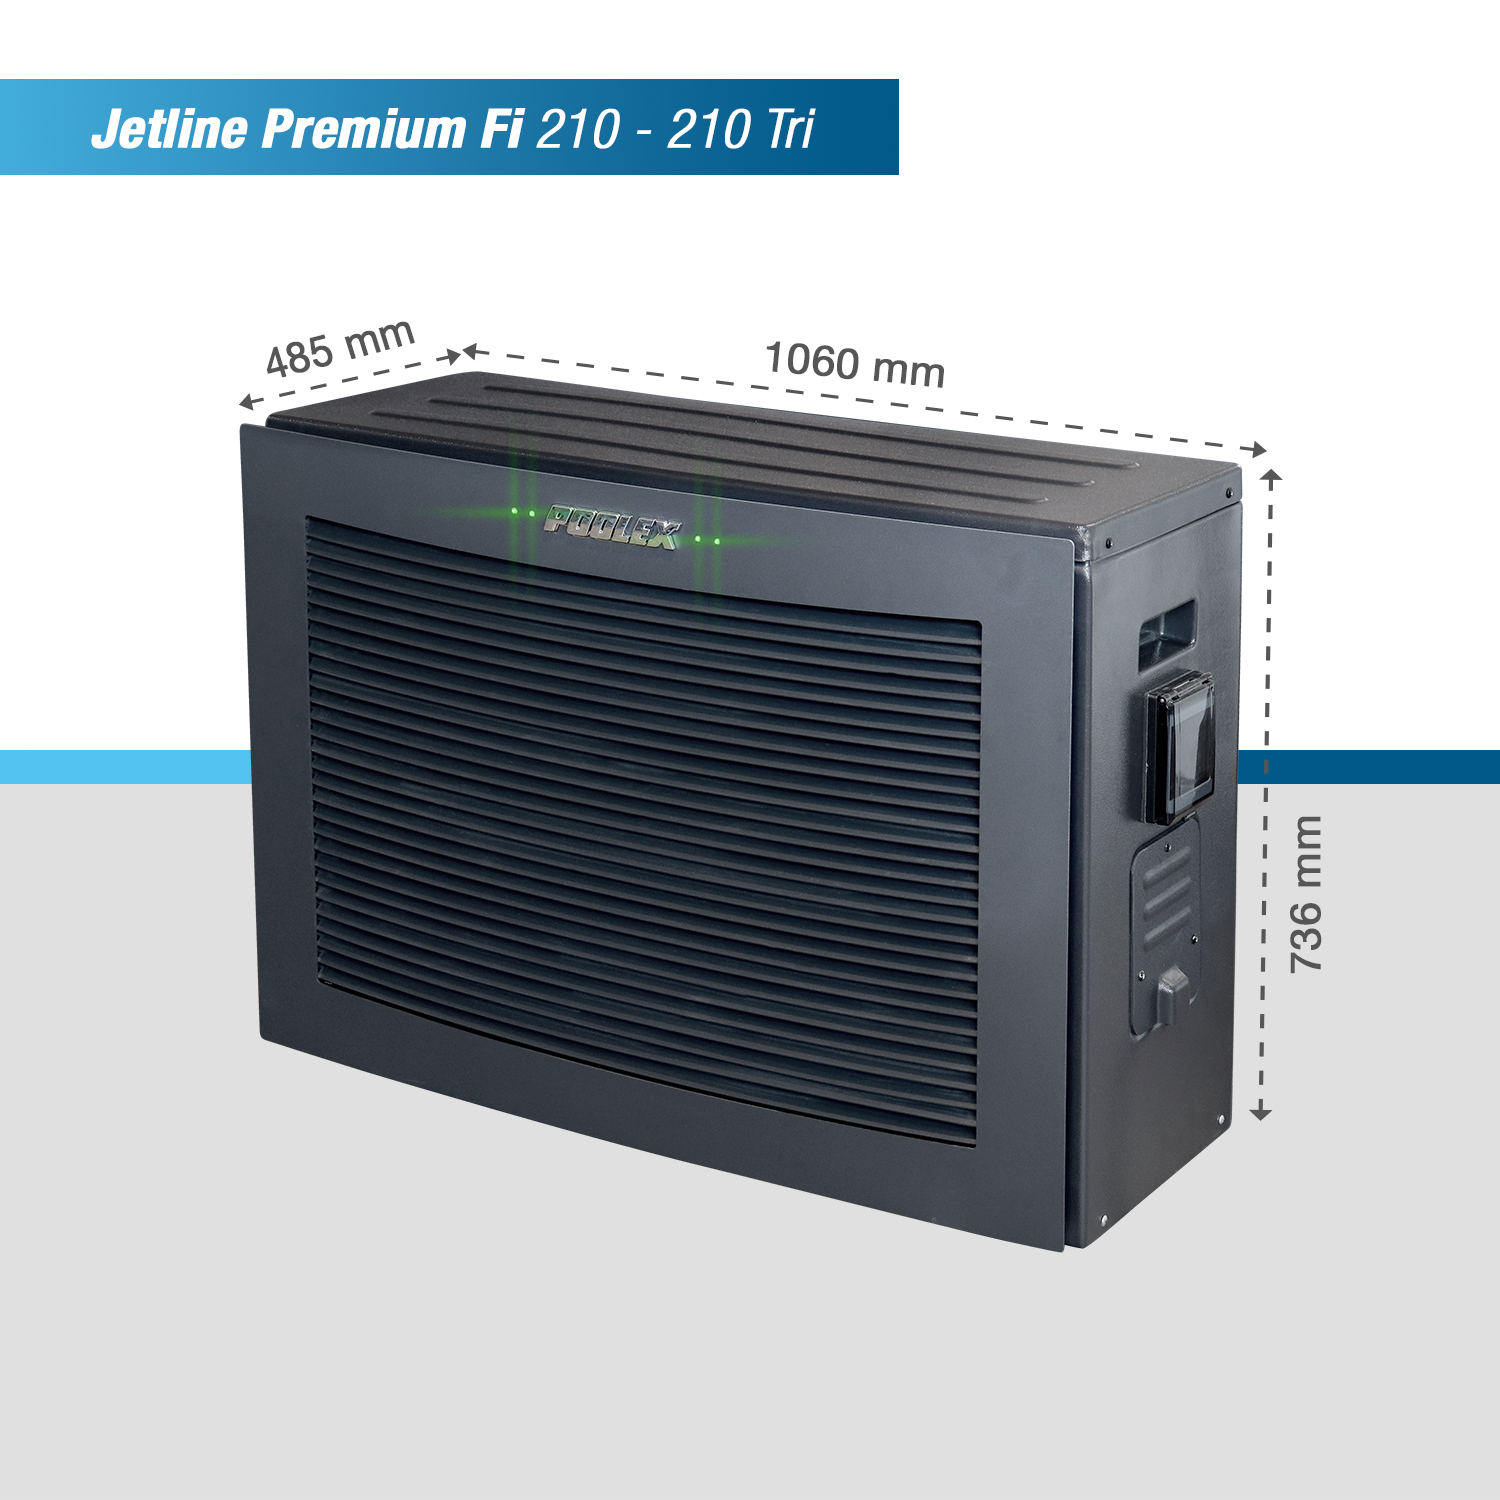 Poolex Jetline Premium Fi, dimensions grande 1